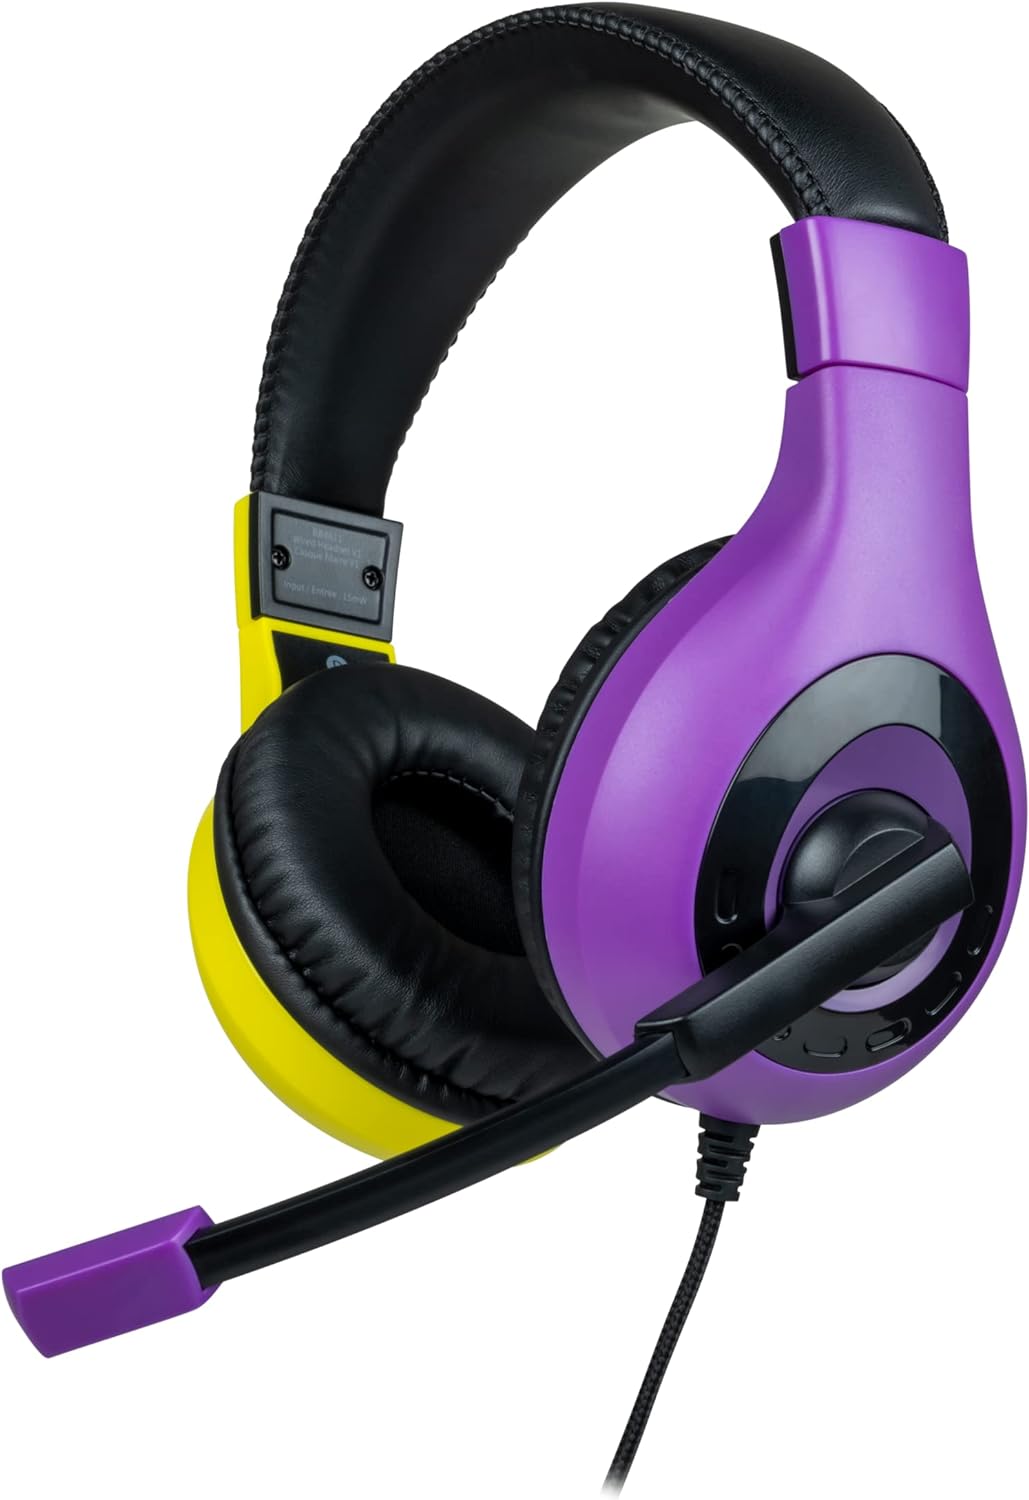 Casque Gaming Big Ben - Pour Nintendo Switch - Filaire - Violet et jaune